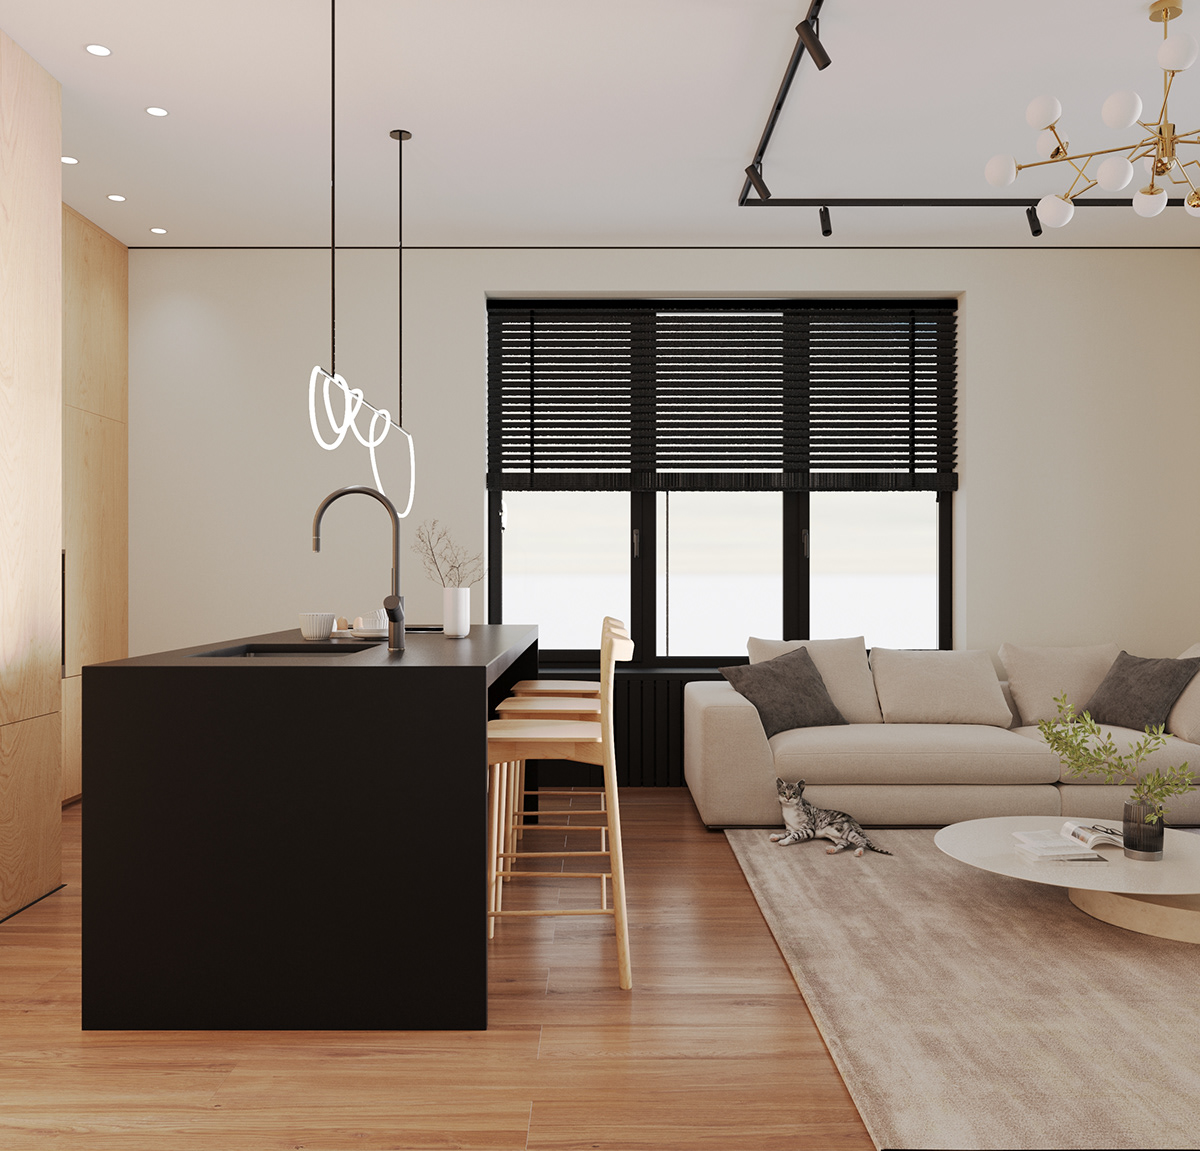 3ds max visualization interior design  corona интерьер дизайн интерьера Визуализация интерьера современный дизайн Дизайн квартиры современный интерьер